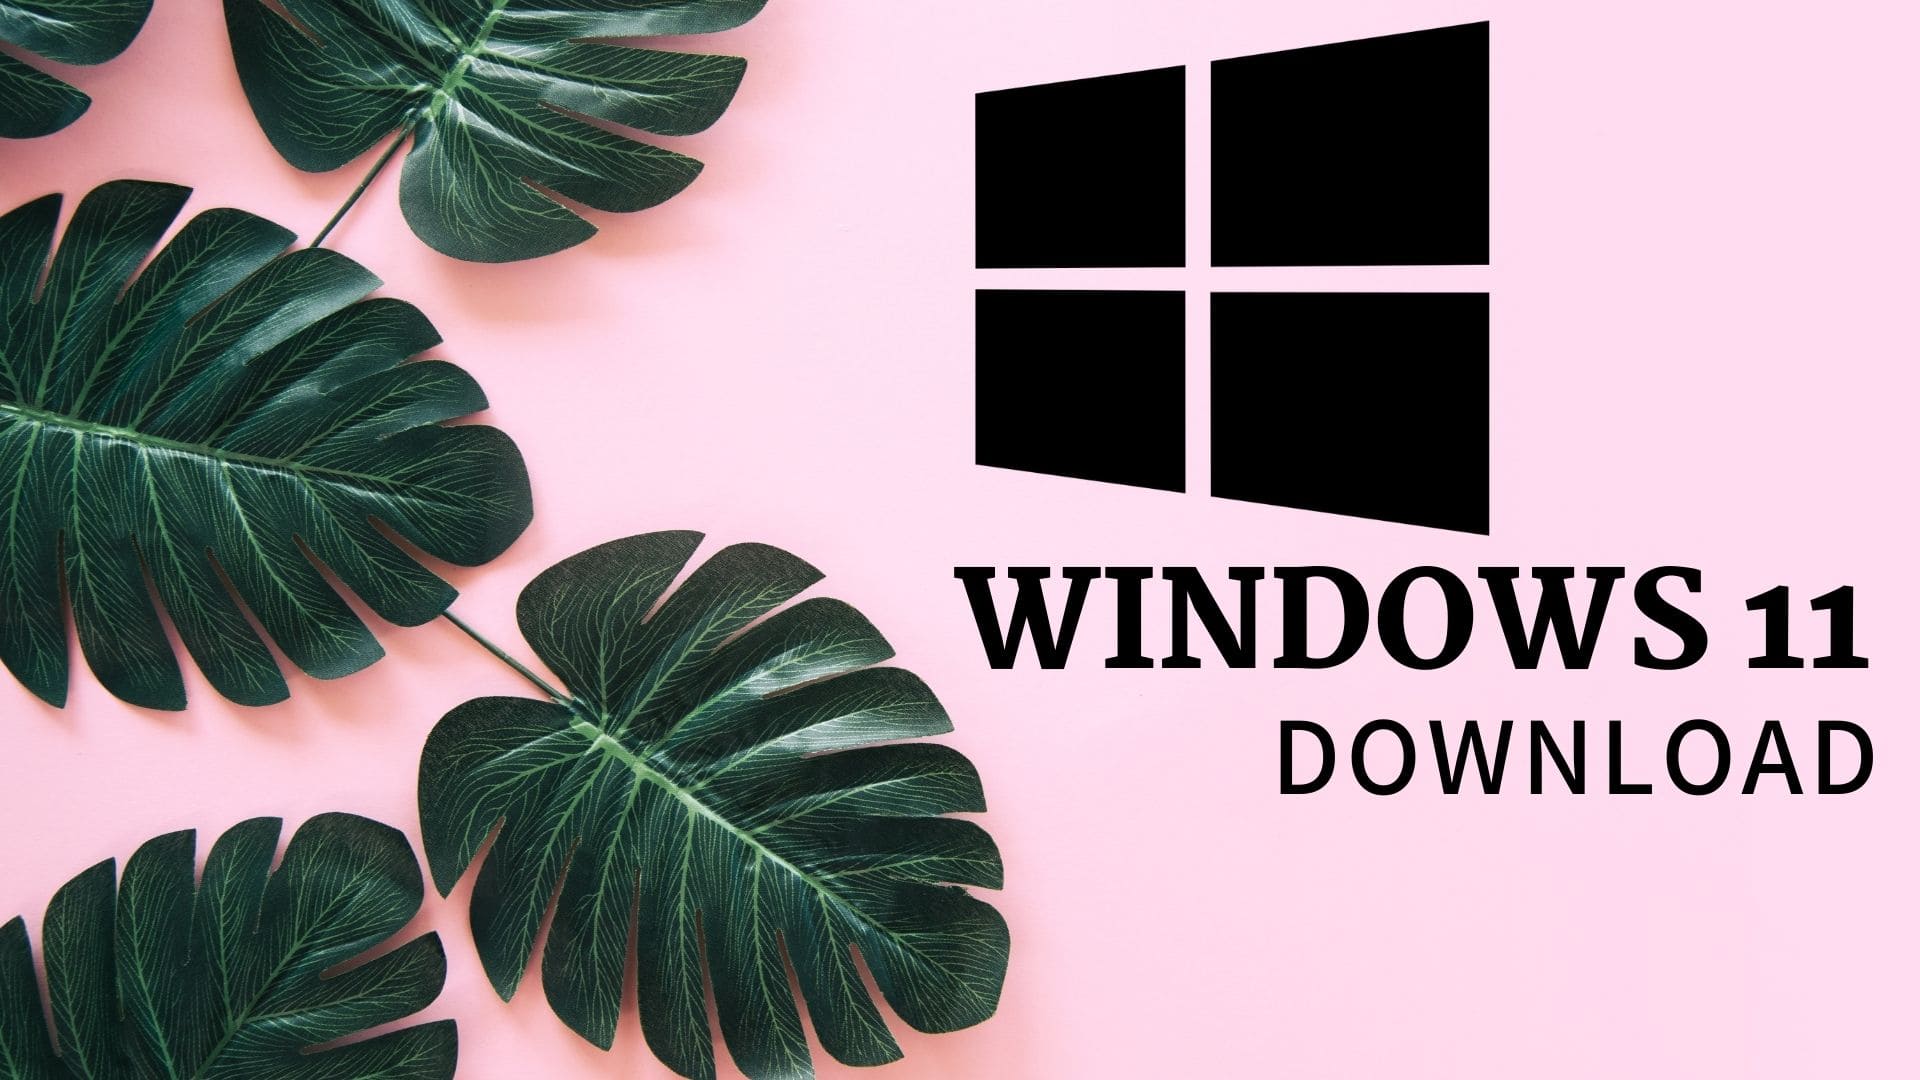 windows 11 release date?